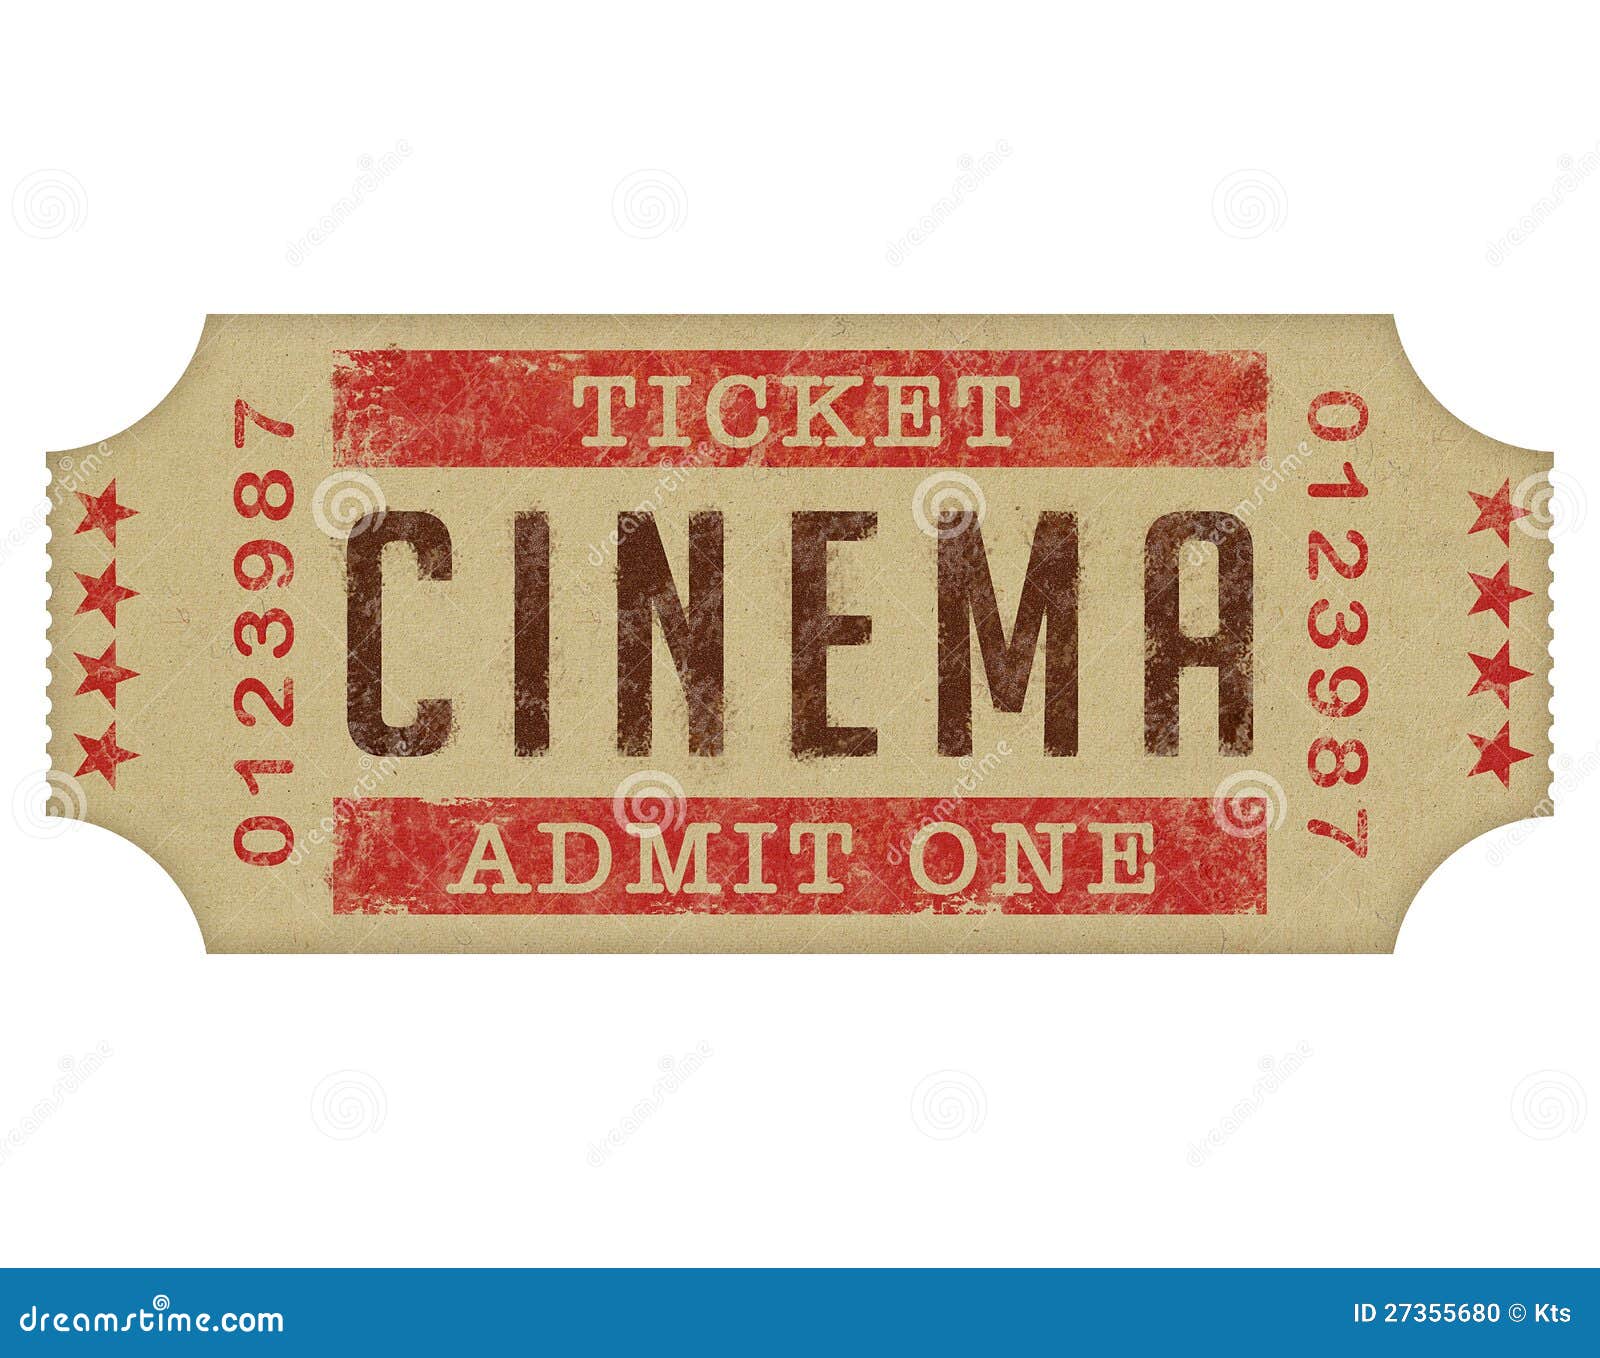 cinema-ticket-stock-photo-image-27355680